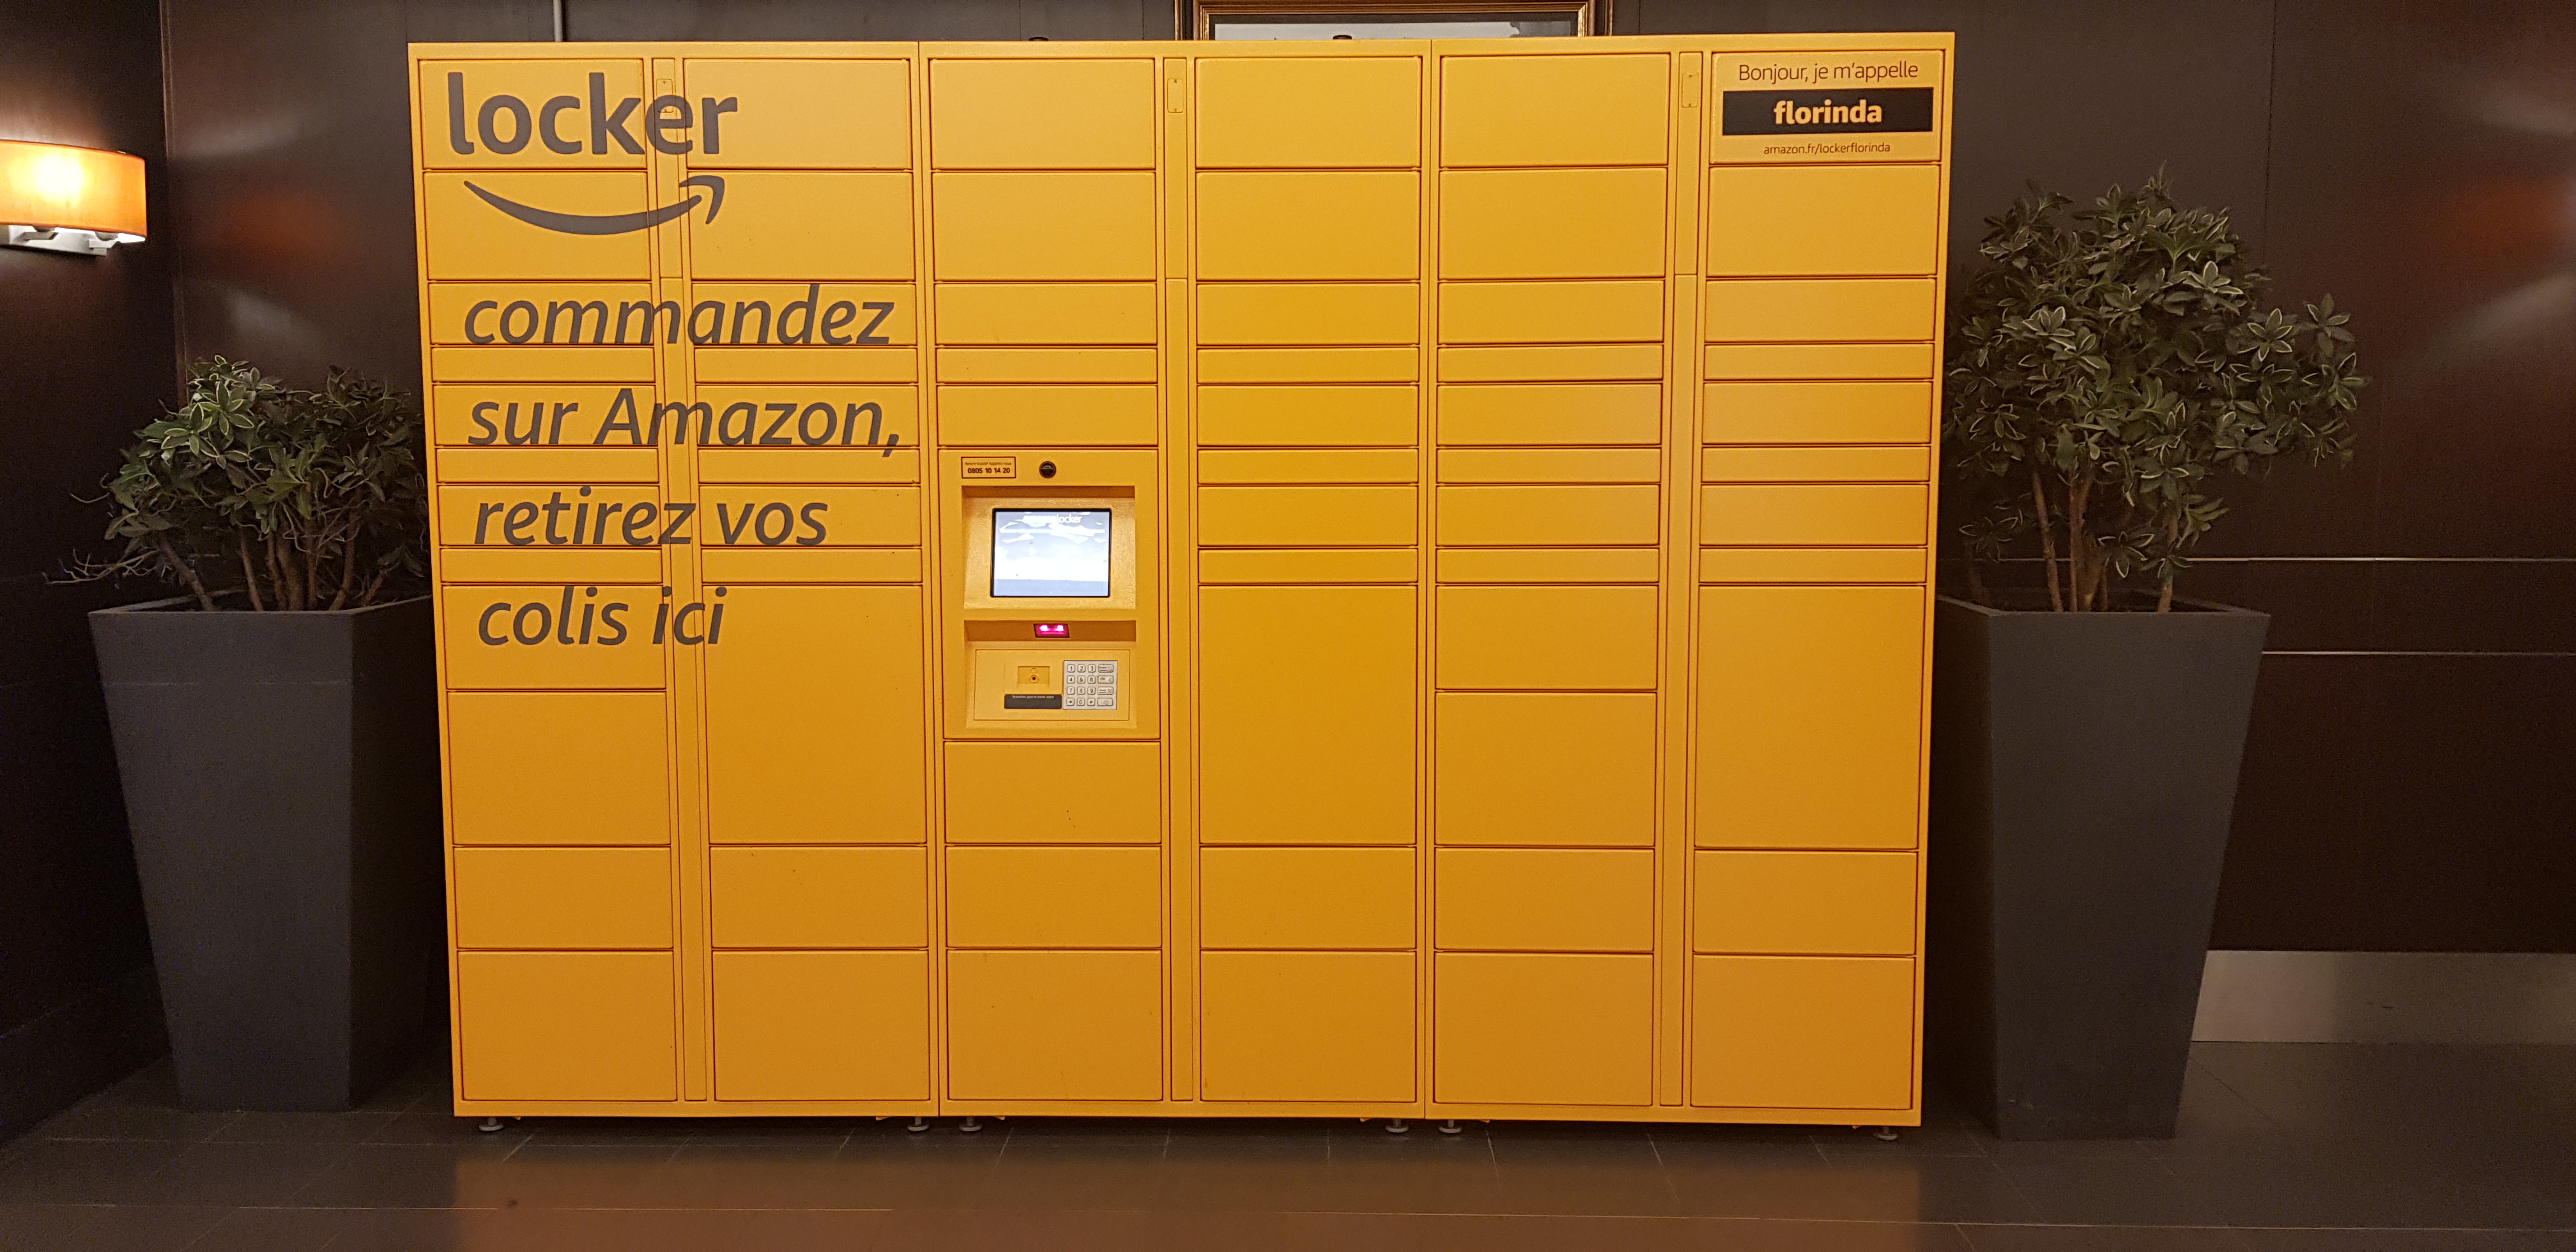 Amazone 에서 주문한 제품 Locker 에서 찾기